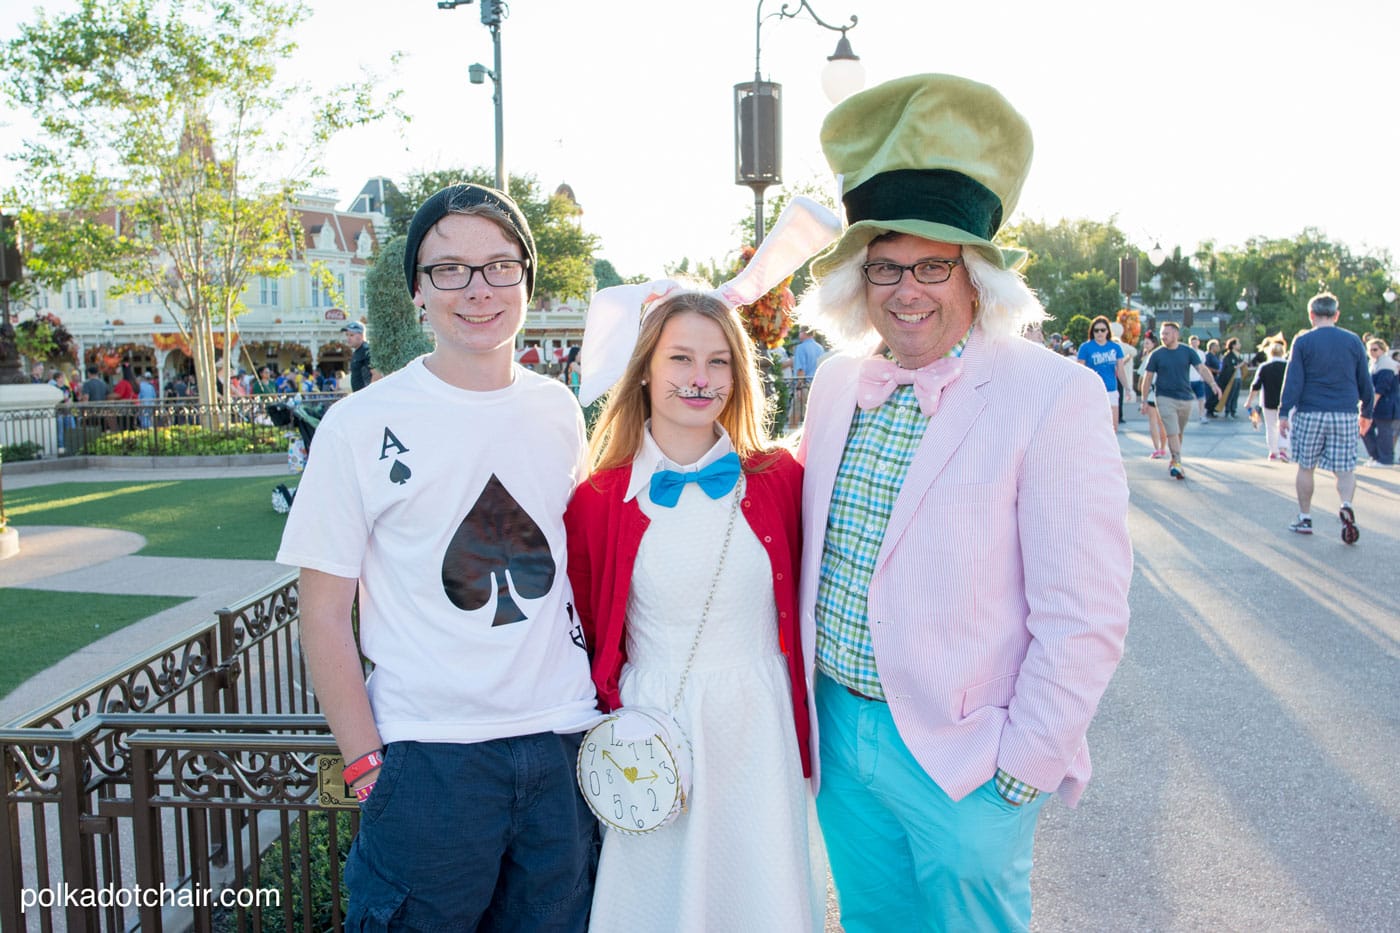 Adult Alice In Wonderland Costume